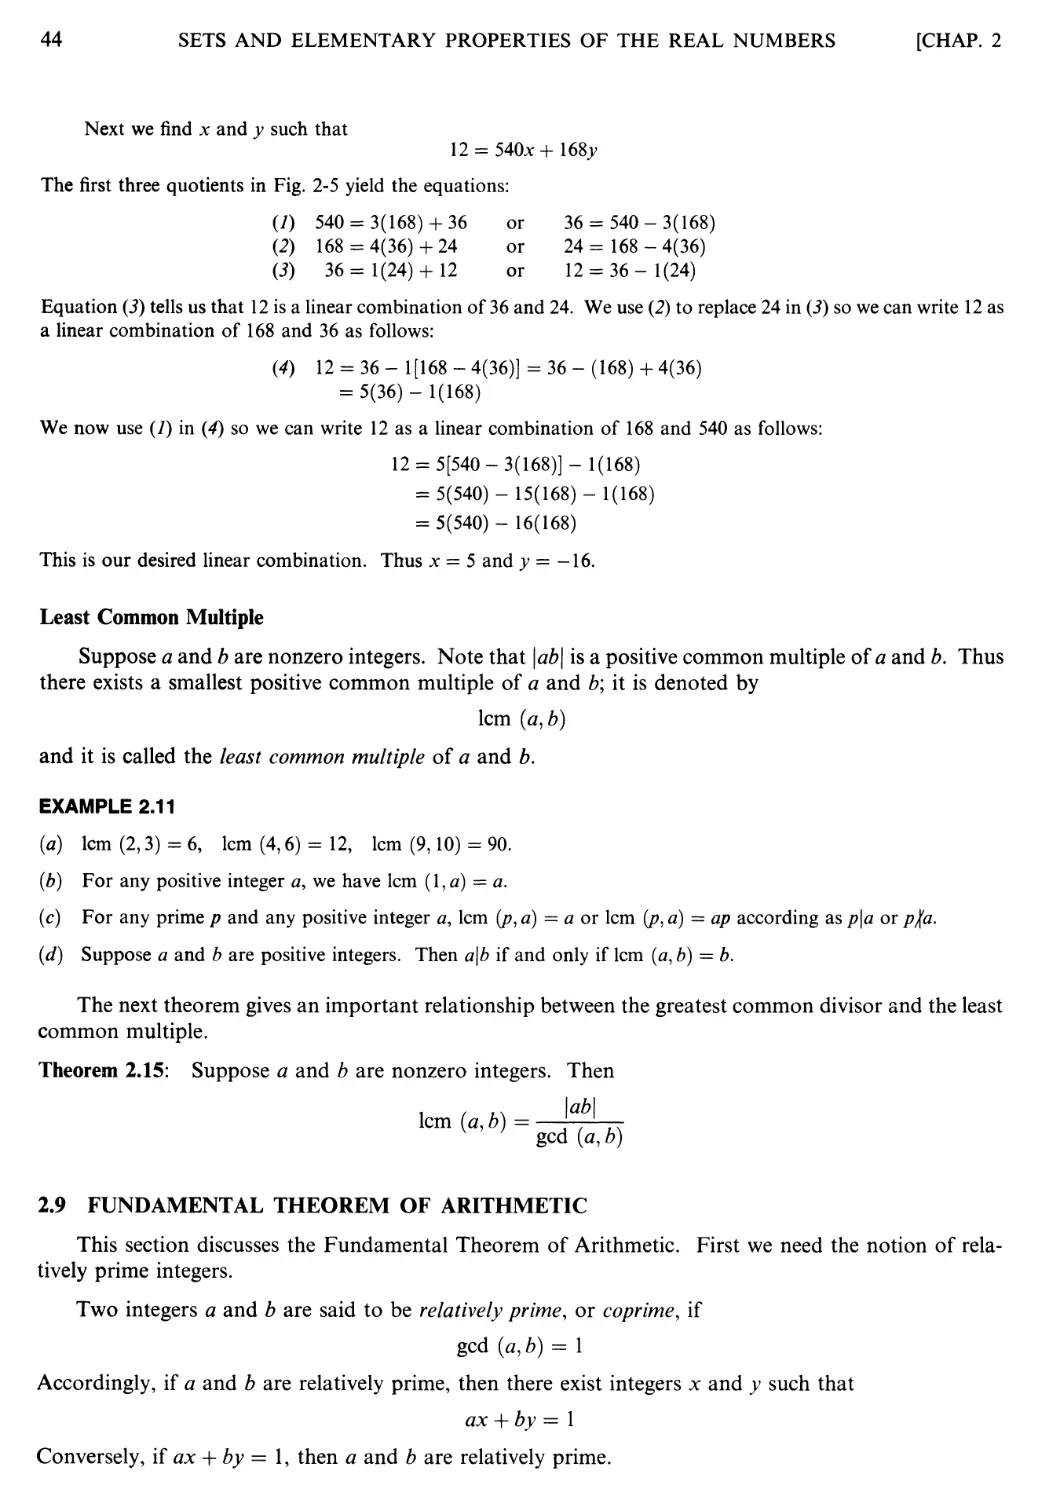 2.9 Fundamental theorem of arithmetic